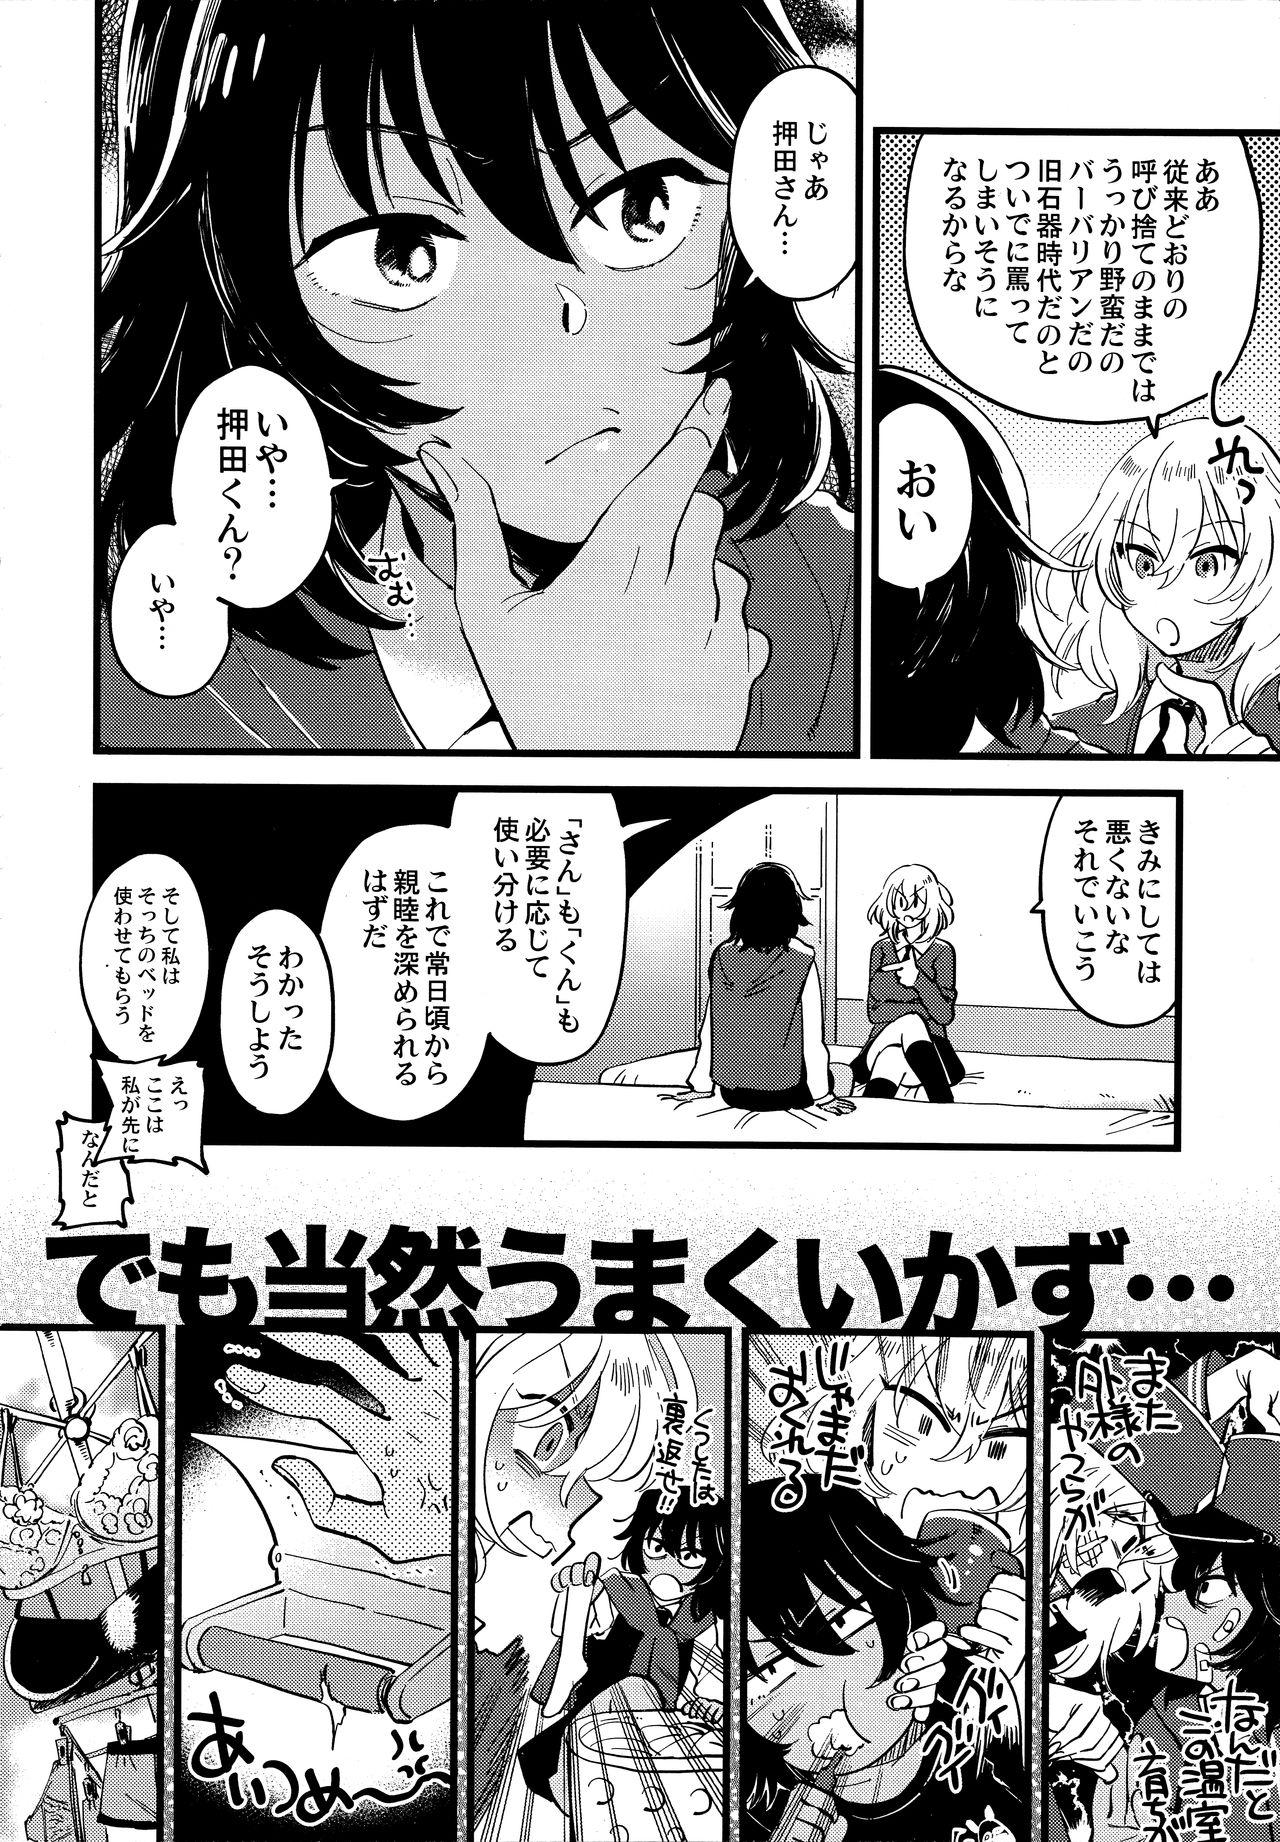 Cruising AnOshi, Nakayoku! - Girls und panzer Plug - Page 5